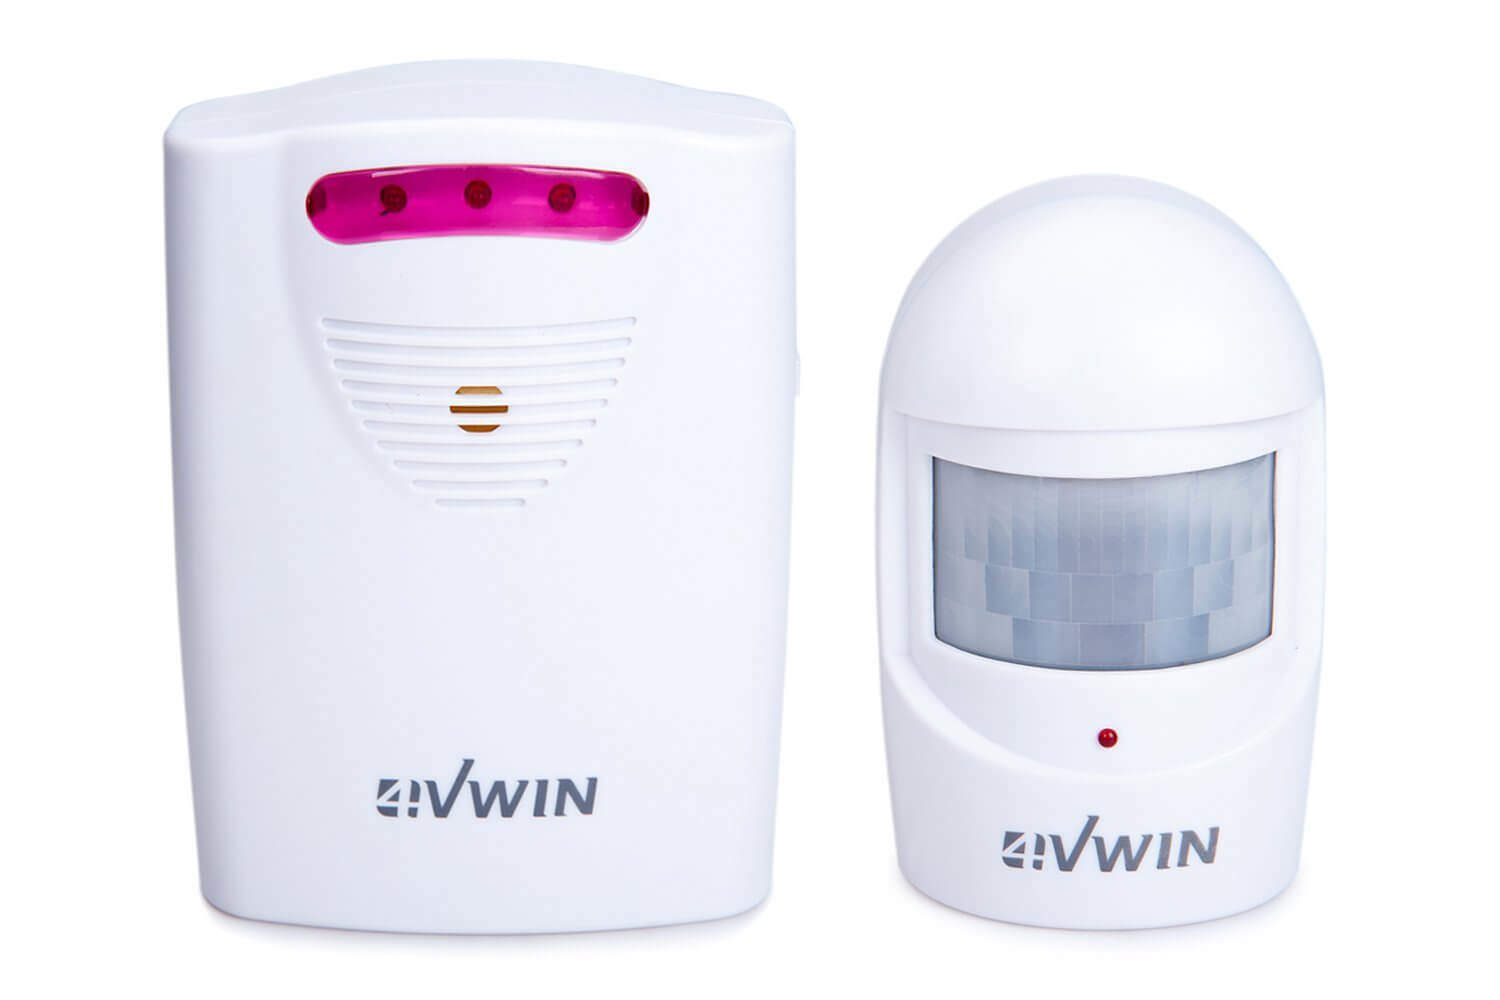 4VWIN Wireless Home Security Driveway Alarm